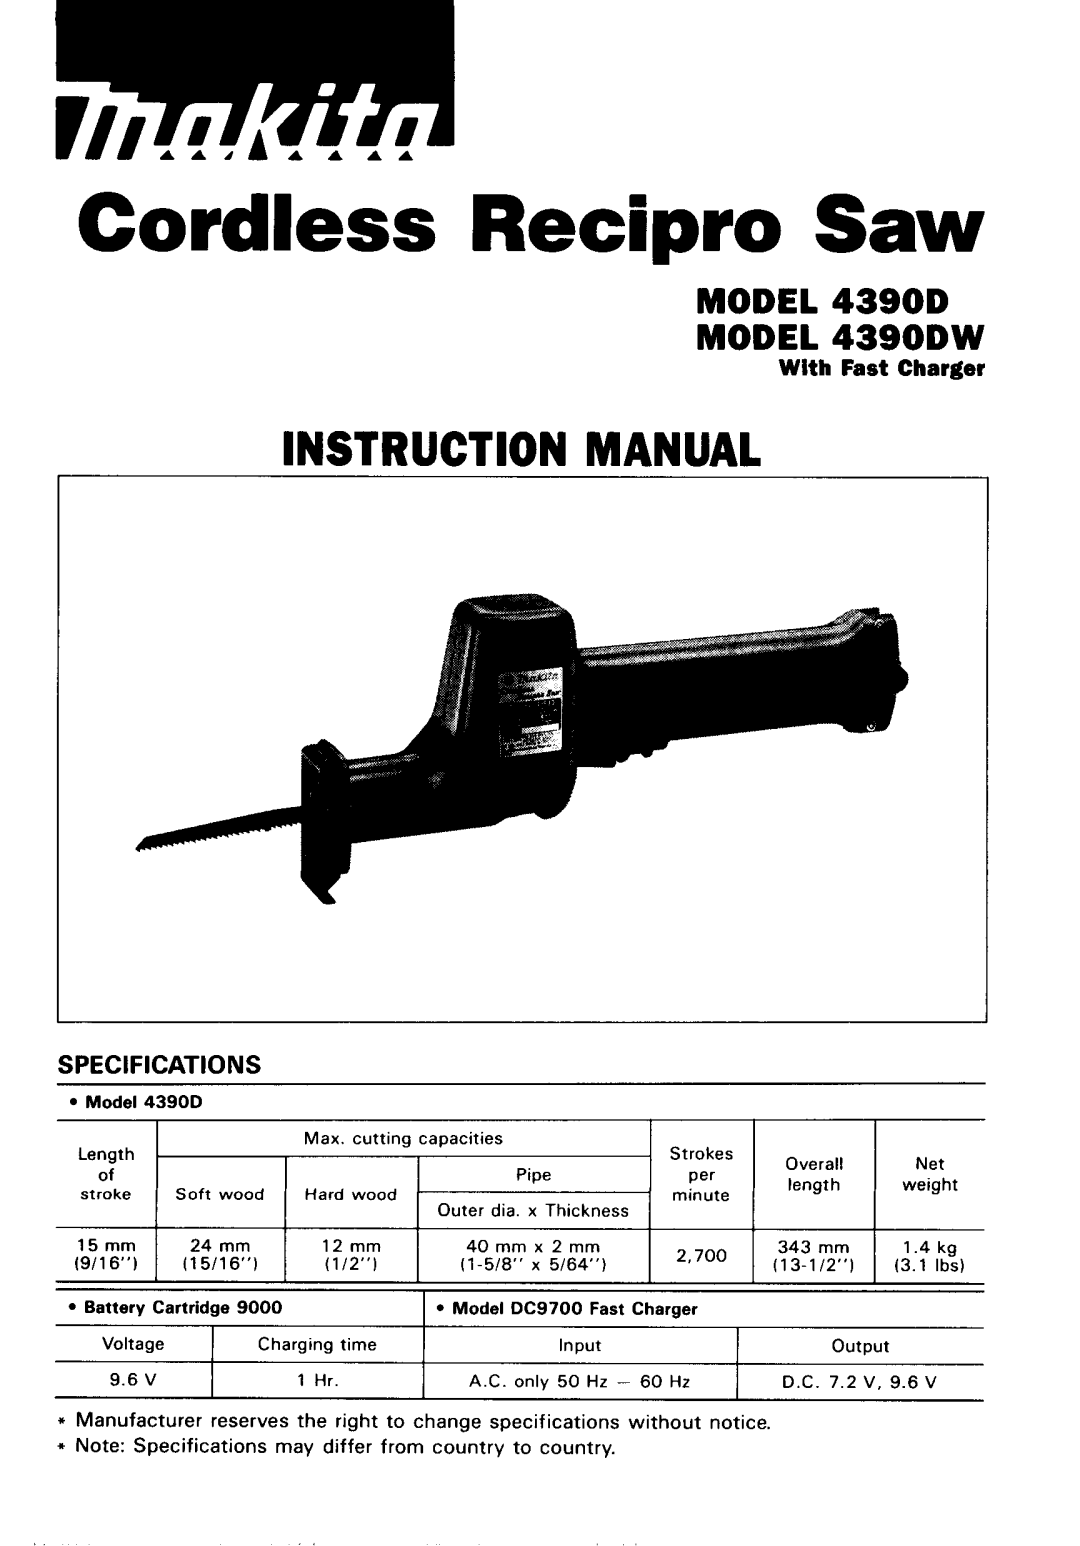 Makita manual 11-2001, CORDLESS RECIPRO SAW Model 4390D MCP Model 4390DWMCP, Used, Description, 651899-2 